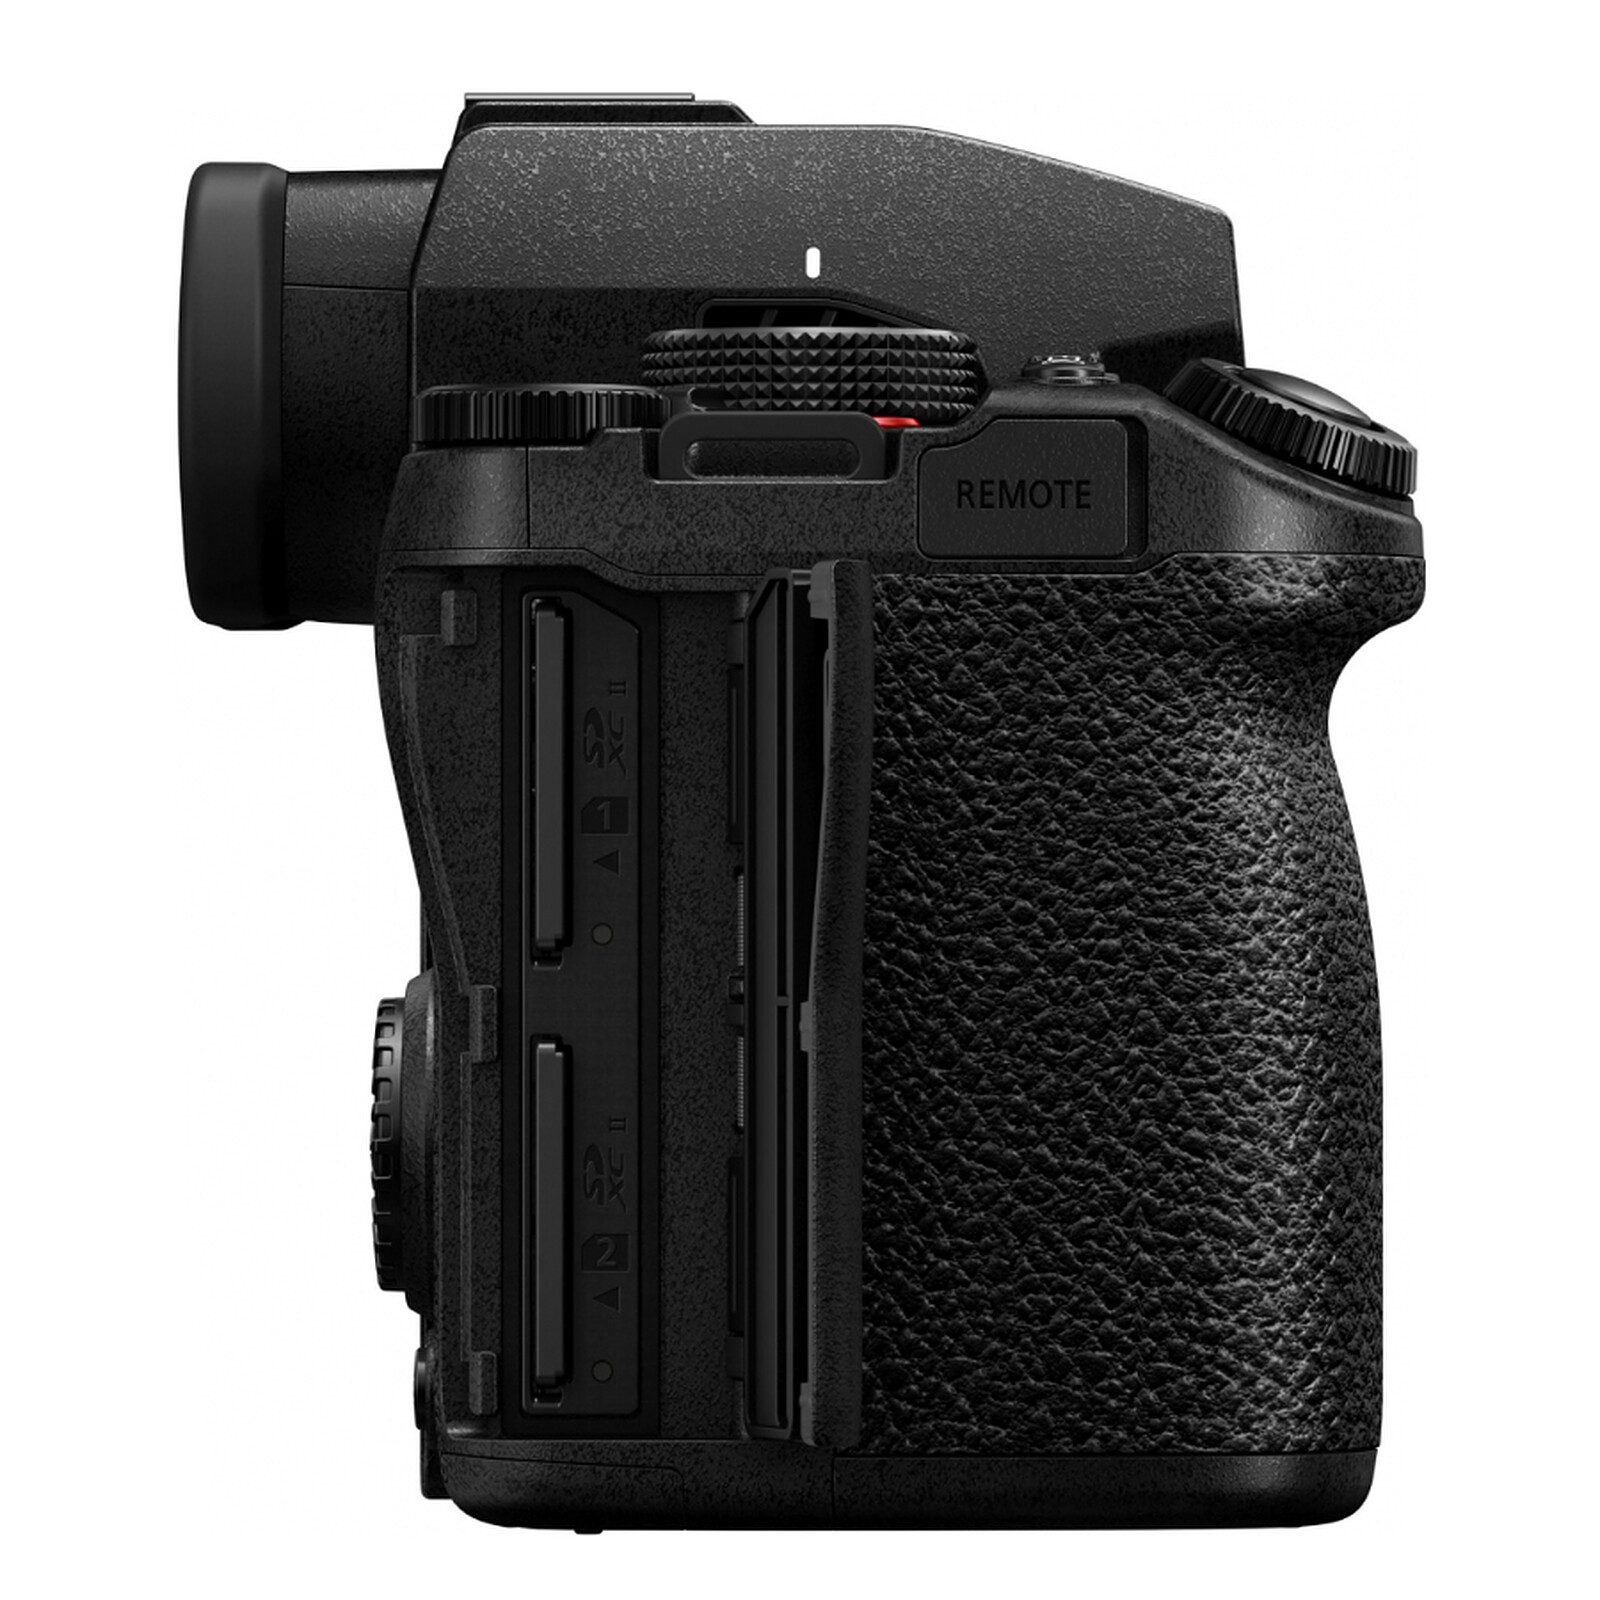 Panasonic LUMIX S5II appareil photo-vidéo hybride plein format 